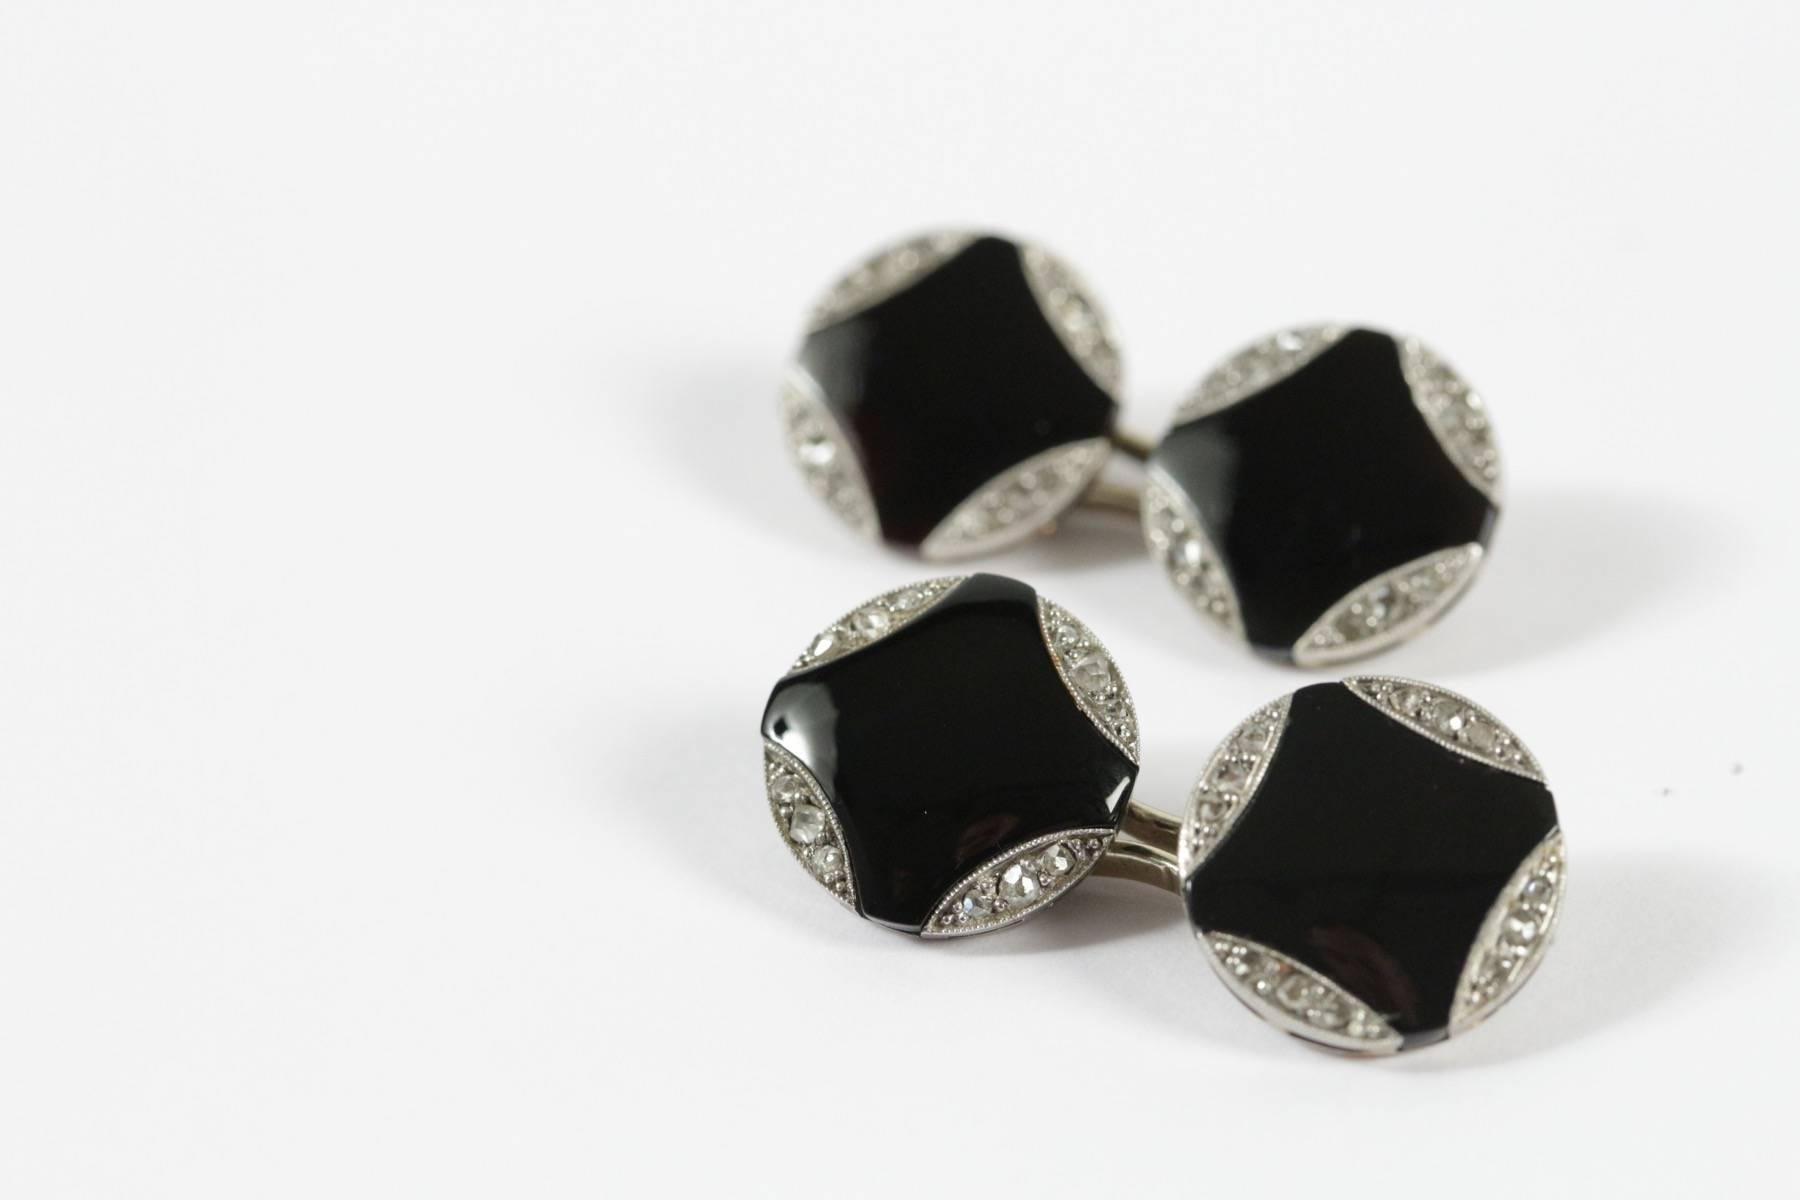 Pair of black onyx, rose cut diamonds and 18k gold cufflinks. French work. Circa 1930.